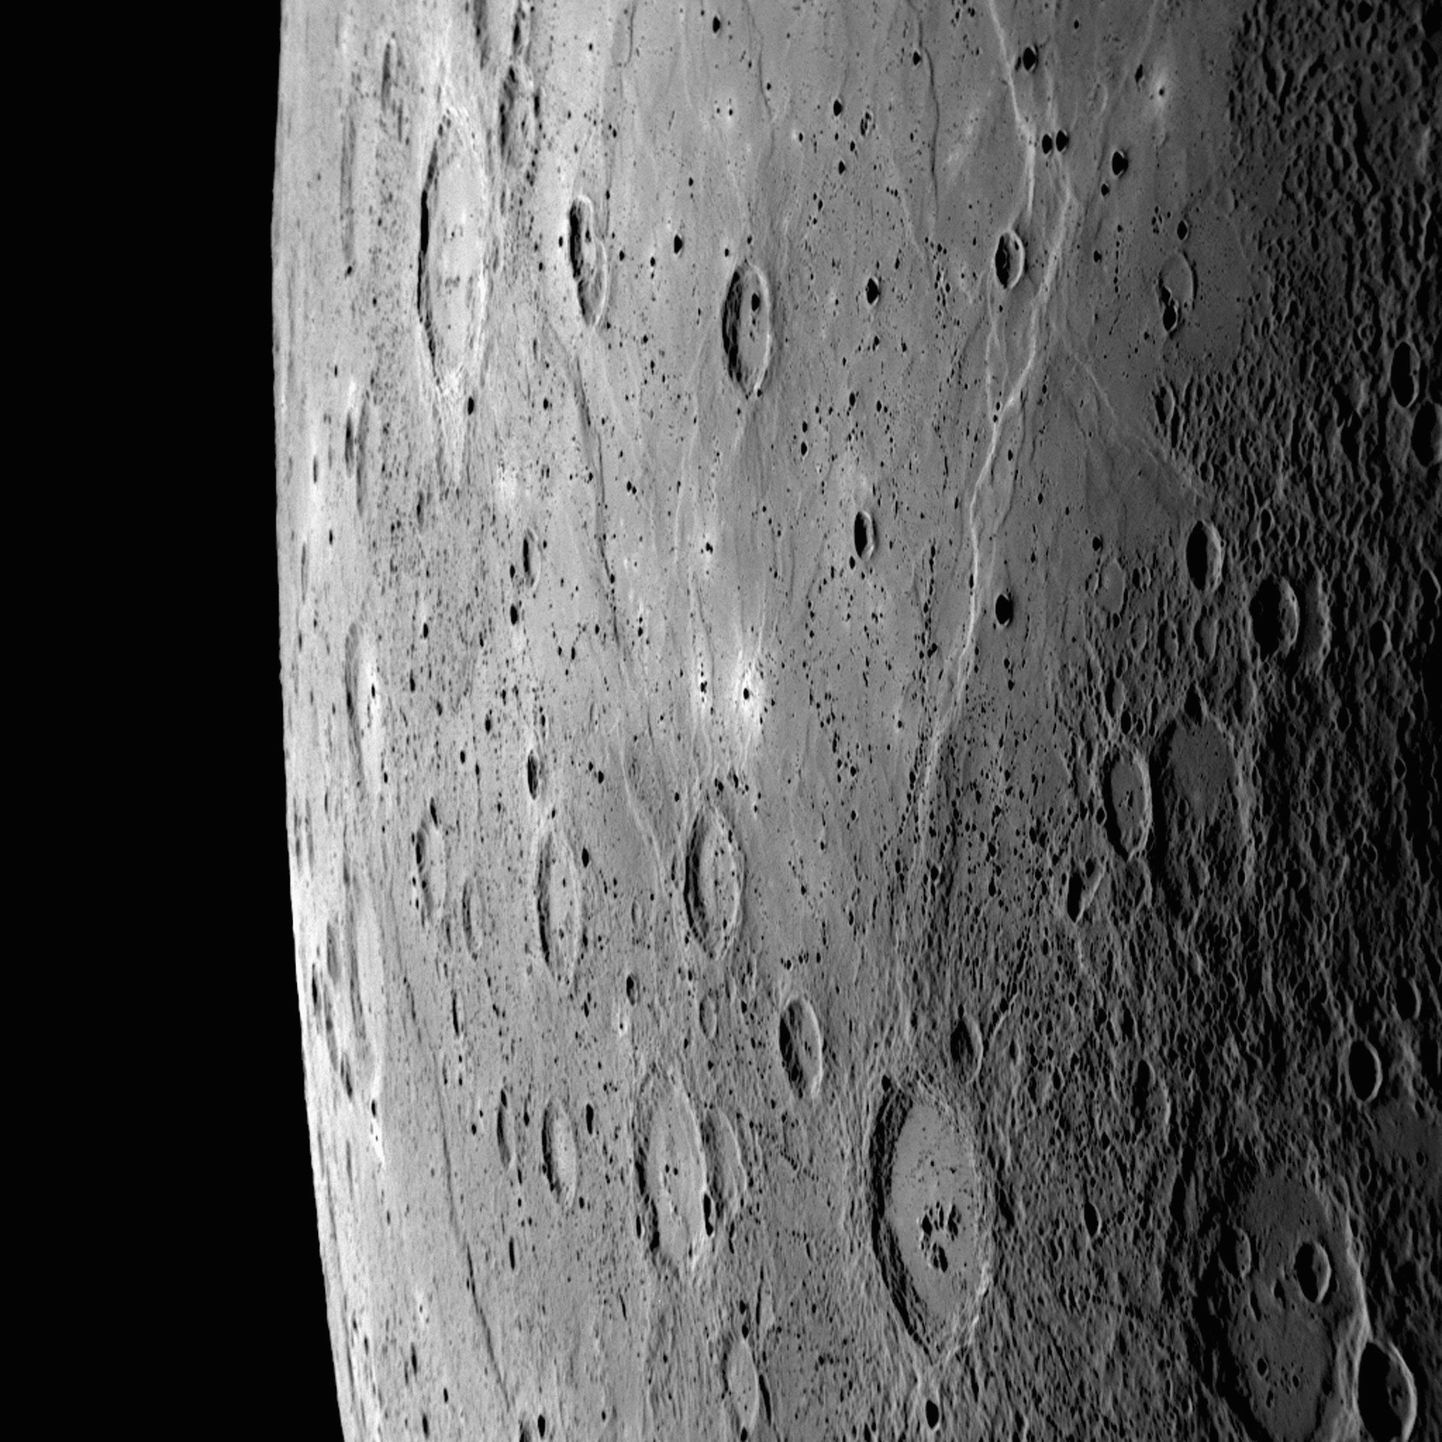 Messenger sondi foto Merkuuri pinnast